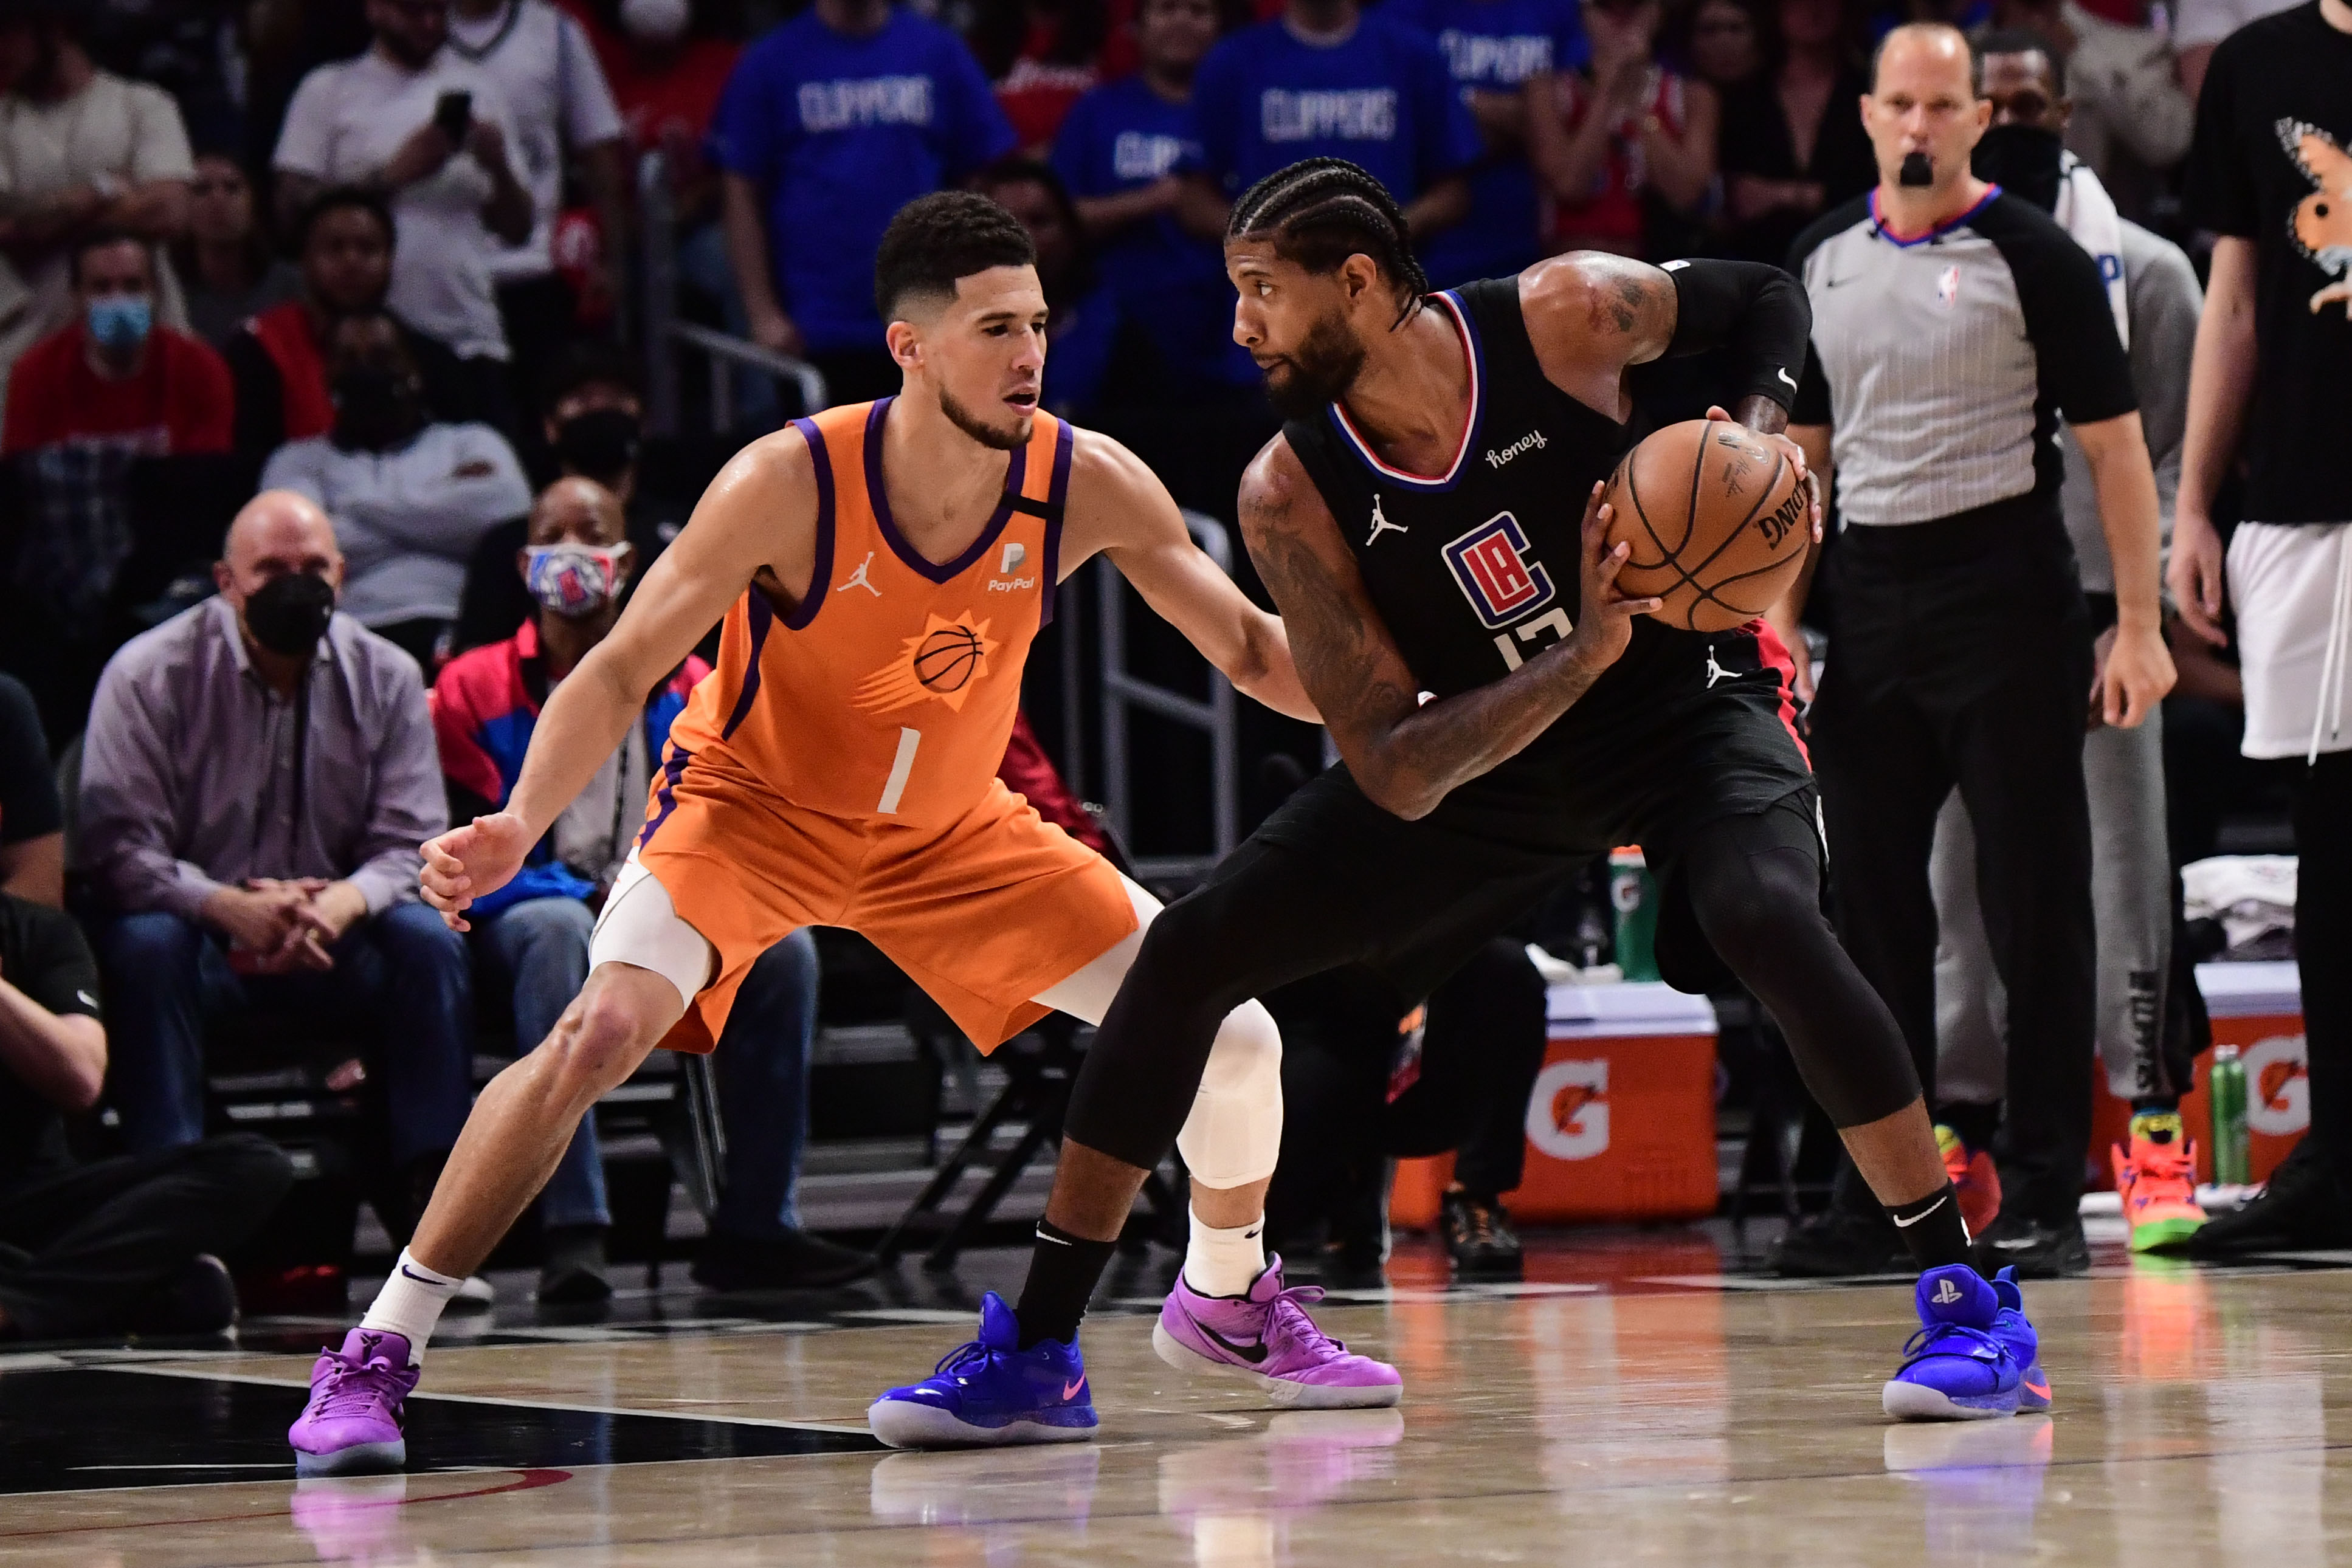 2021 NBA Playoffs - Phoenix Suns v LA Clippers